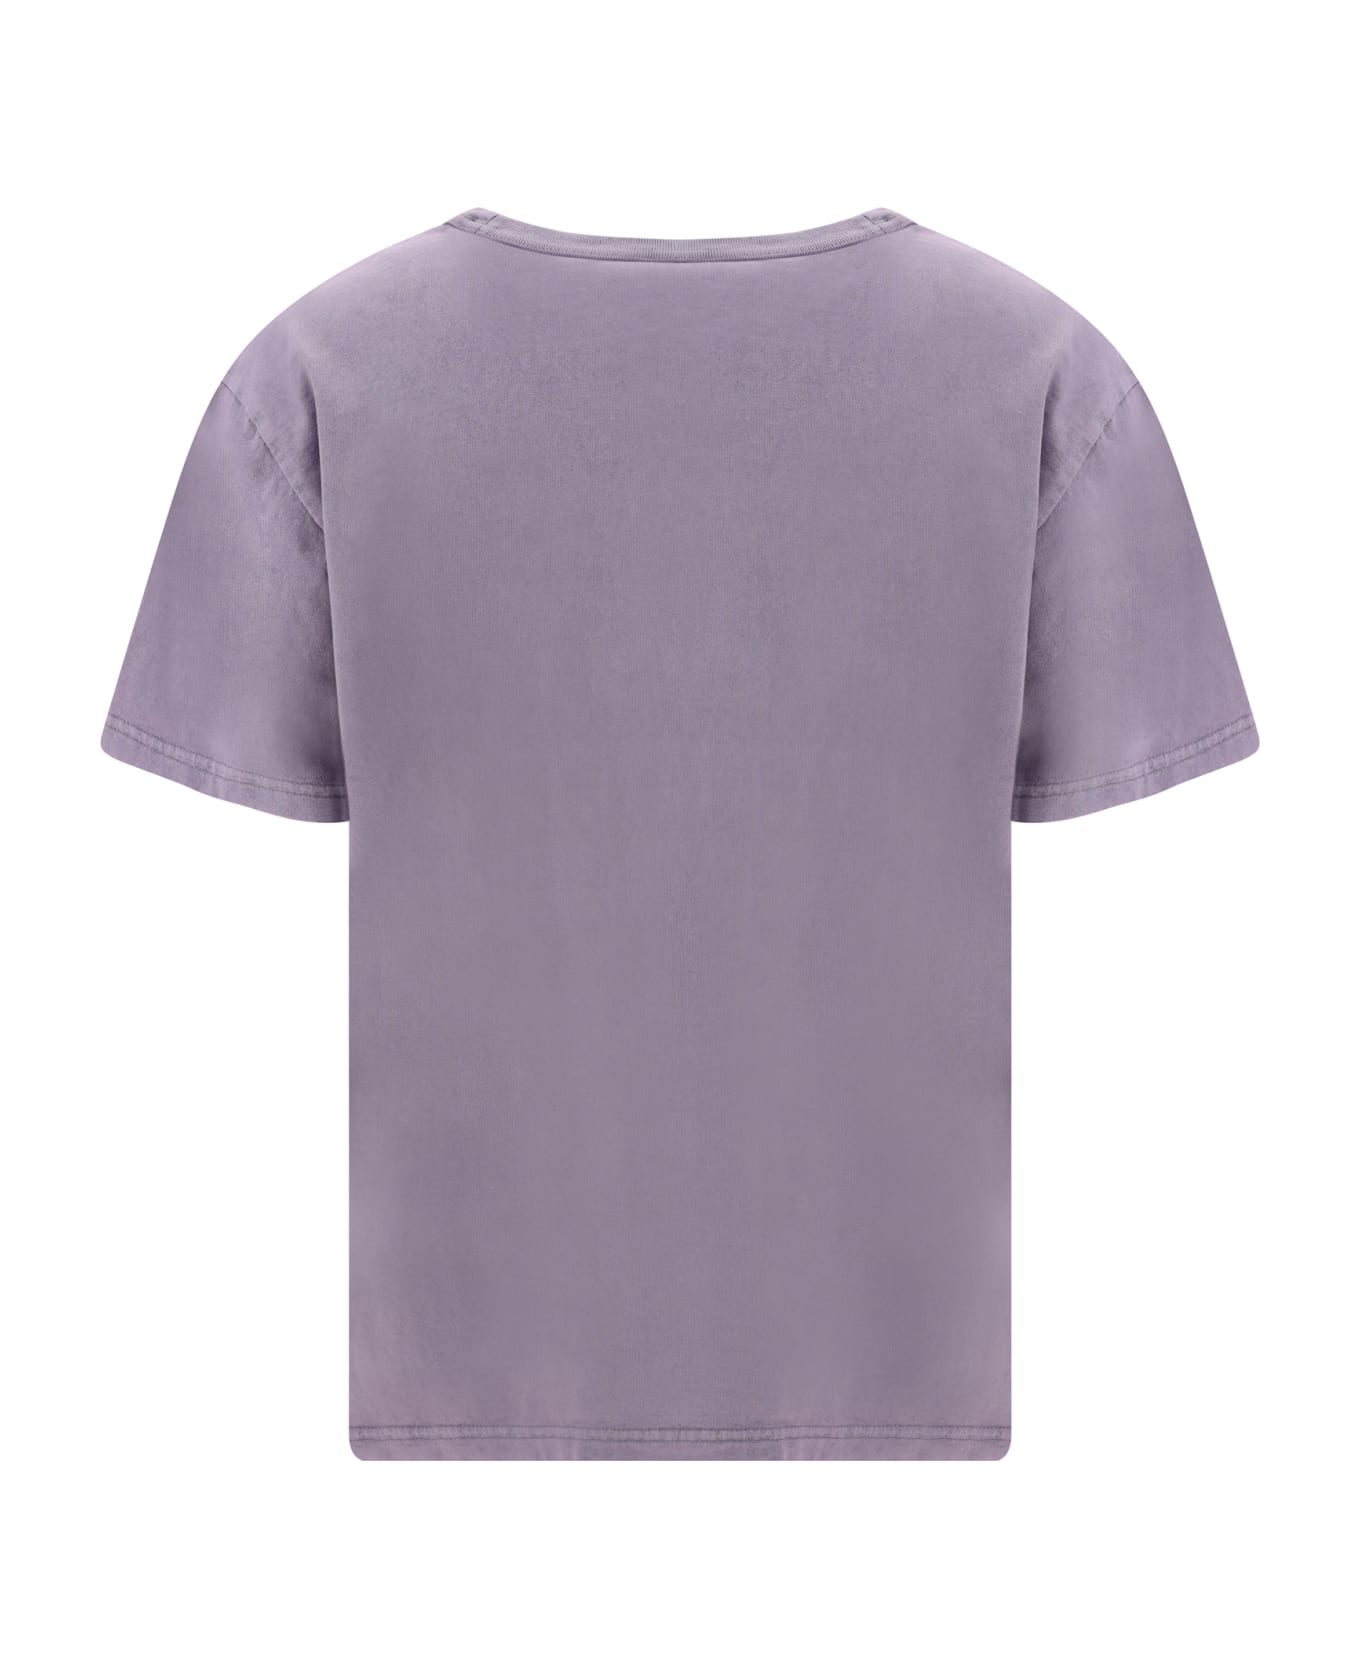 Alexander Wang Essential T-shirt - A Acid Pink Tシャツ